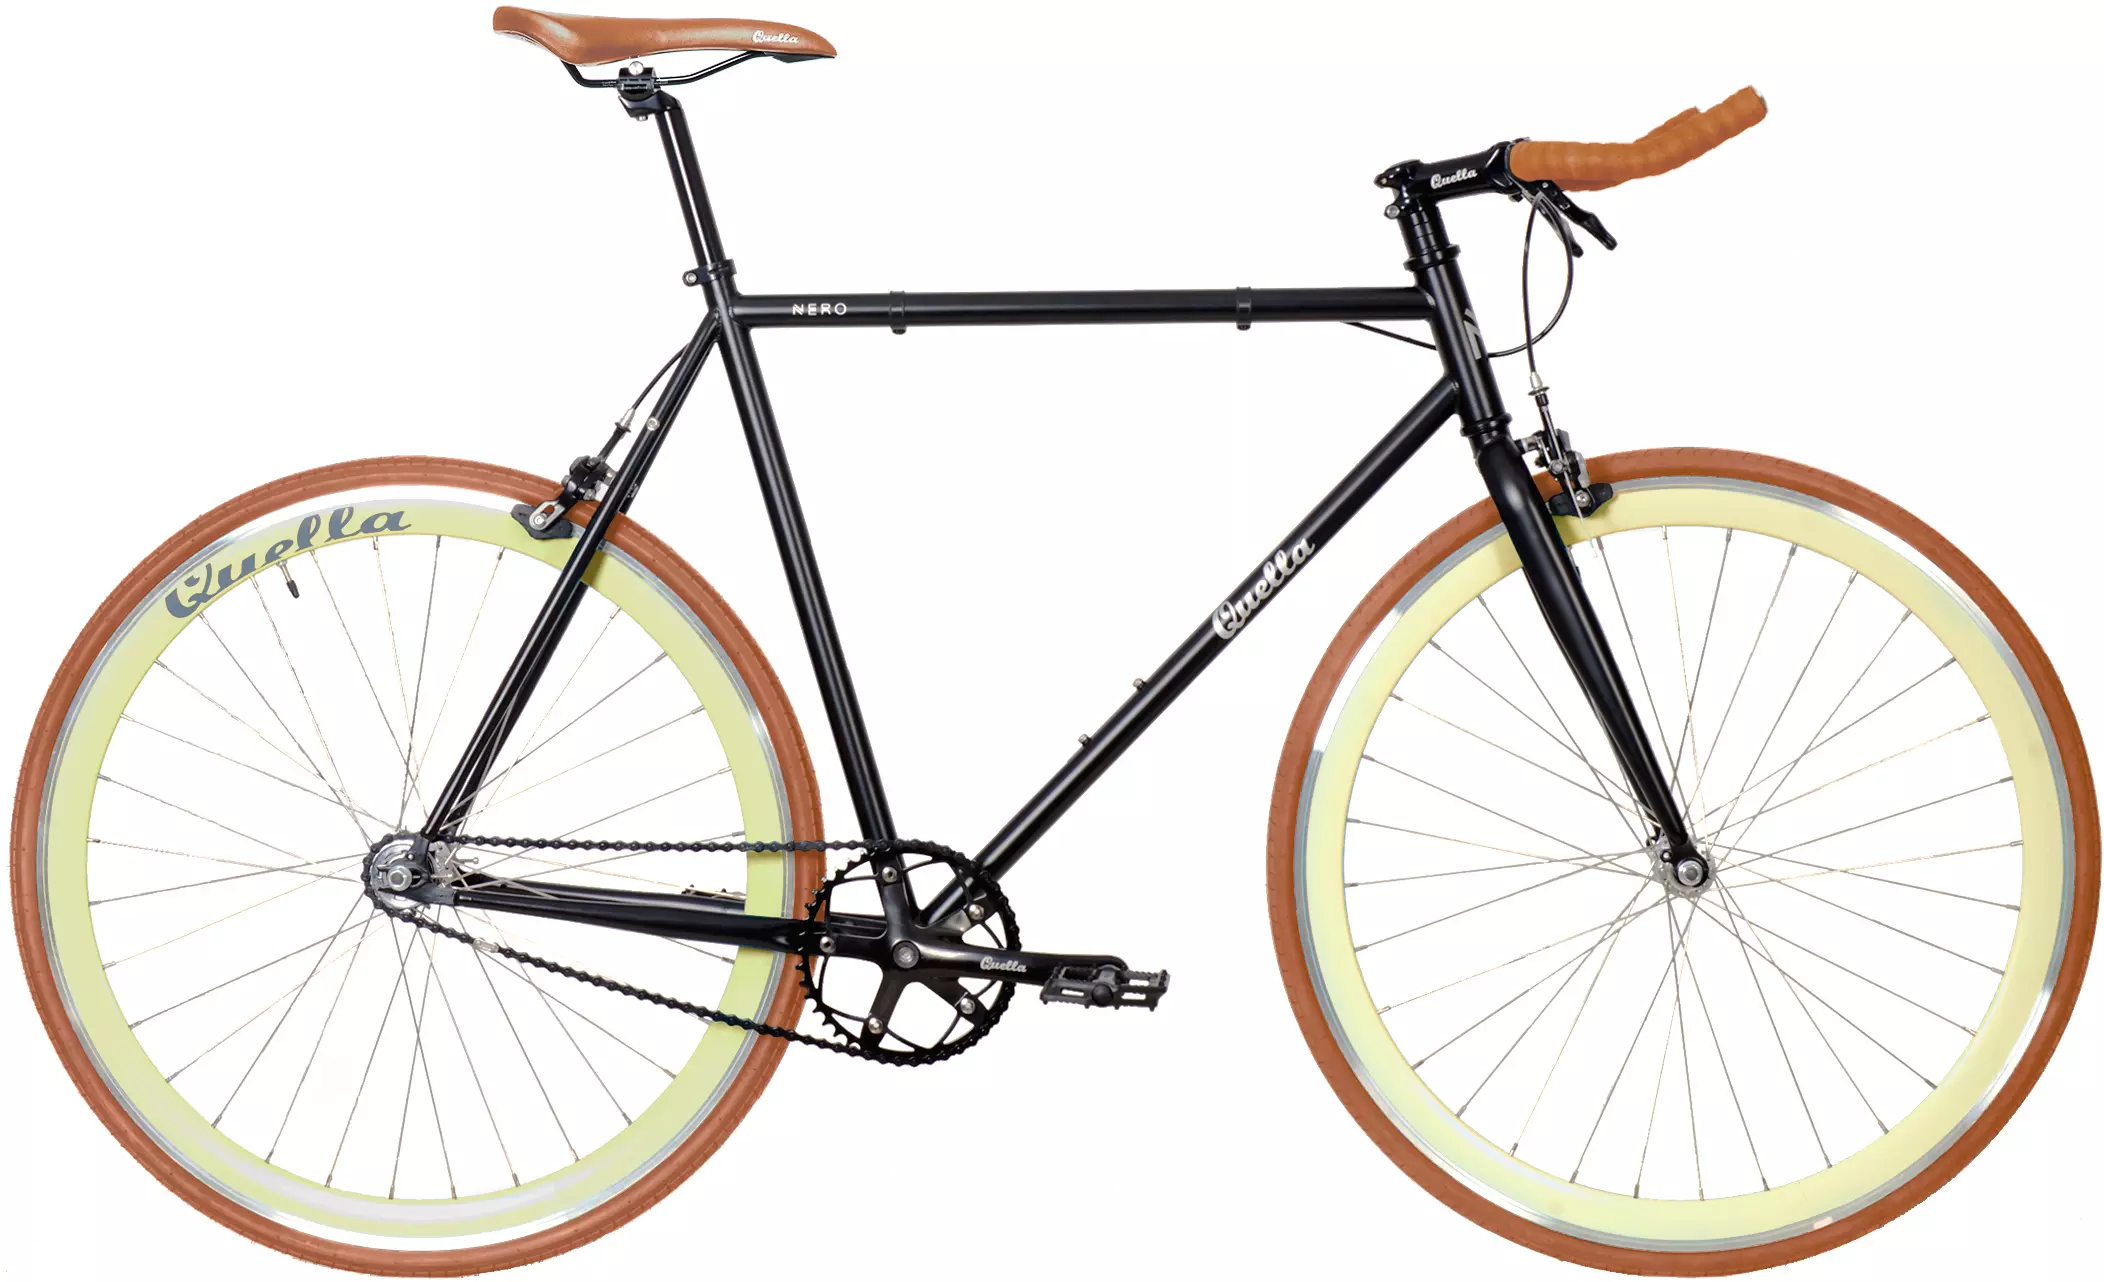 61cm bike frame size